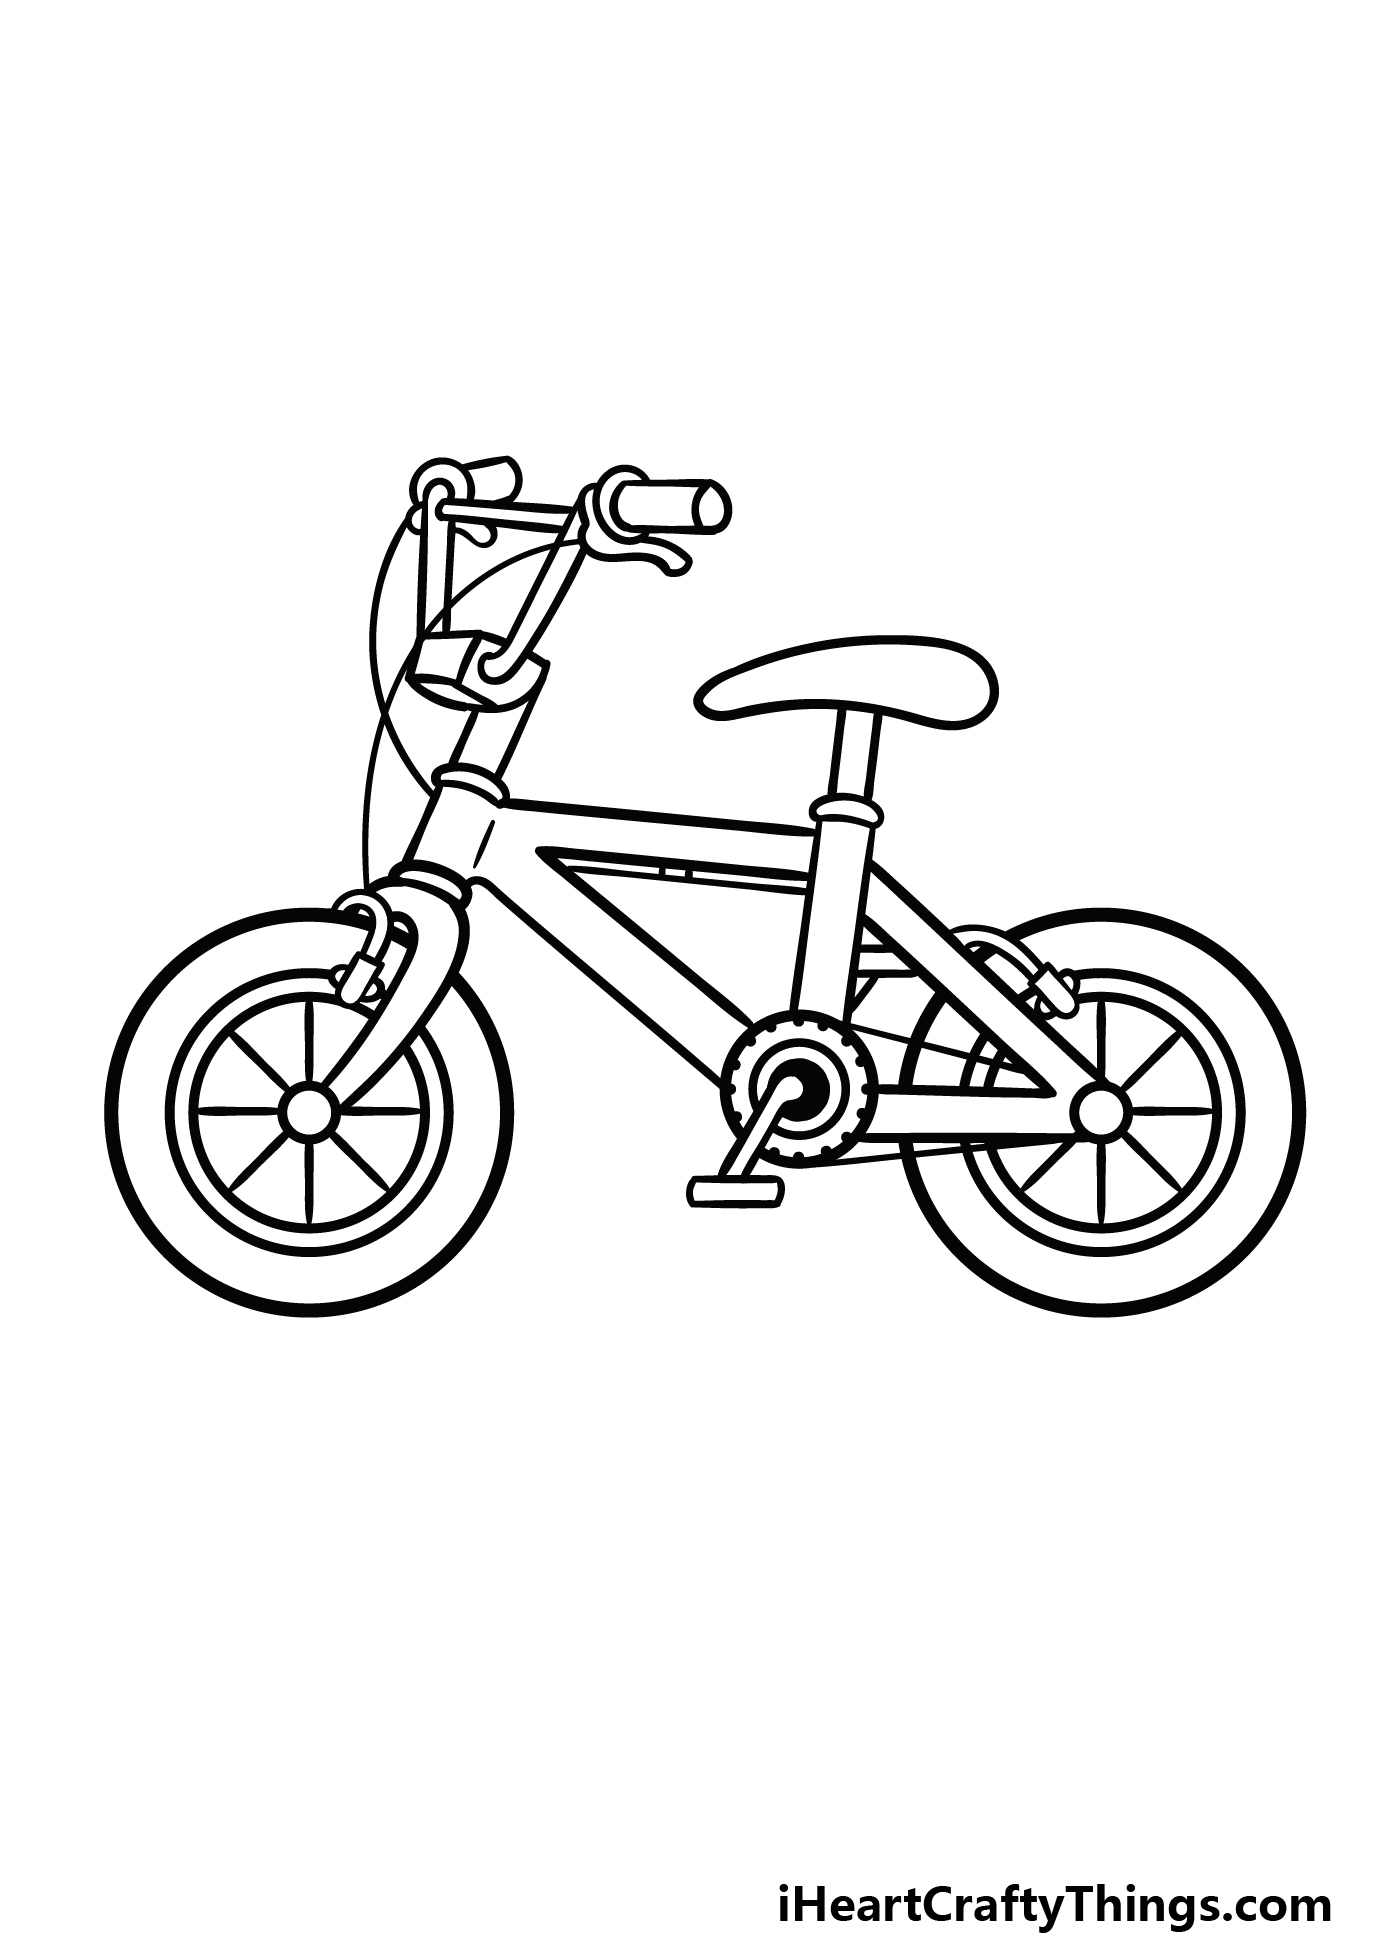 Bike sketch | Pencil on poster board | Clint Gorman | Flickr-gemektower.com.vn